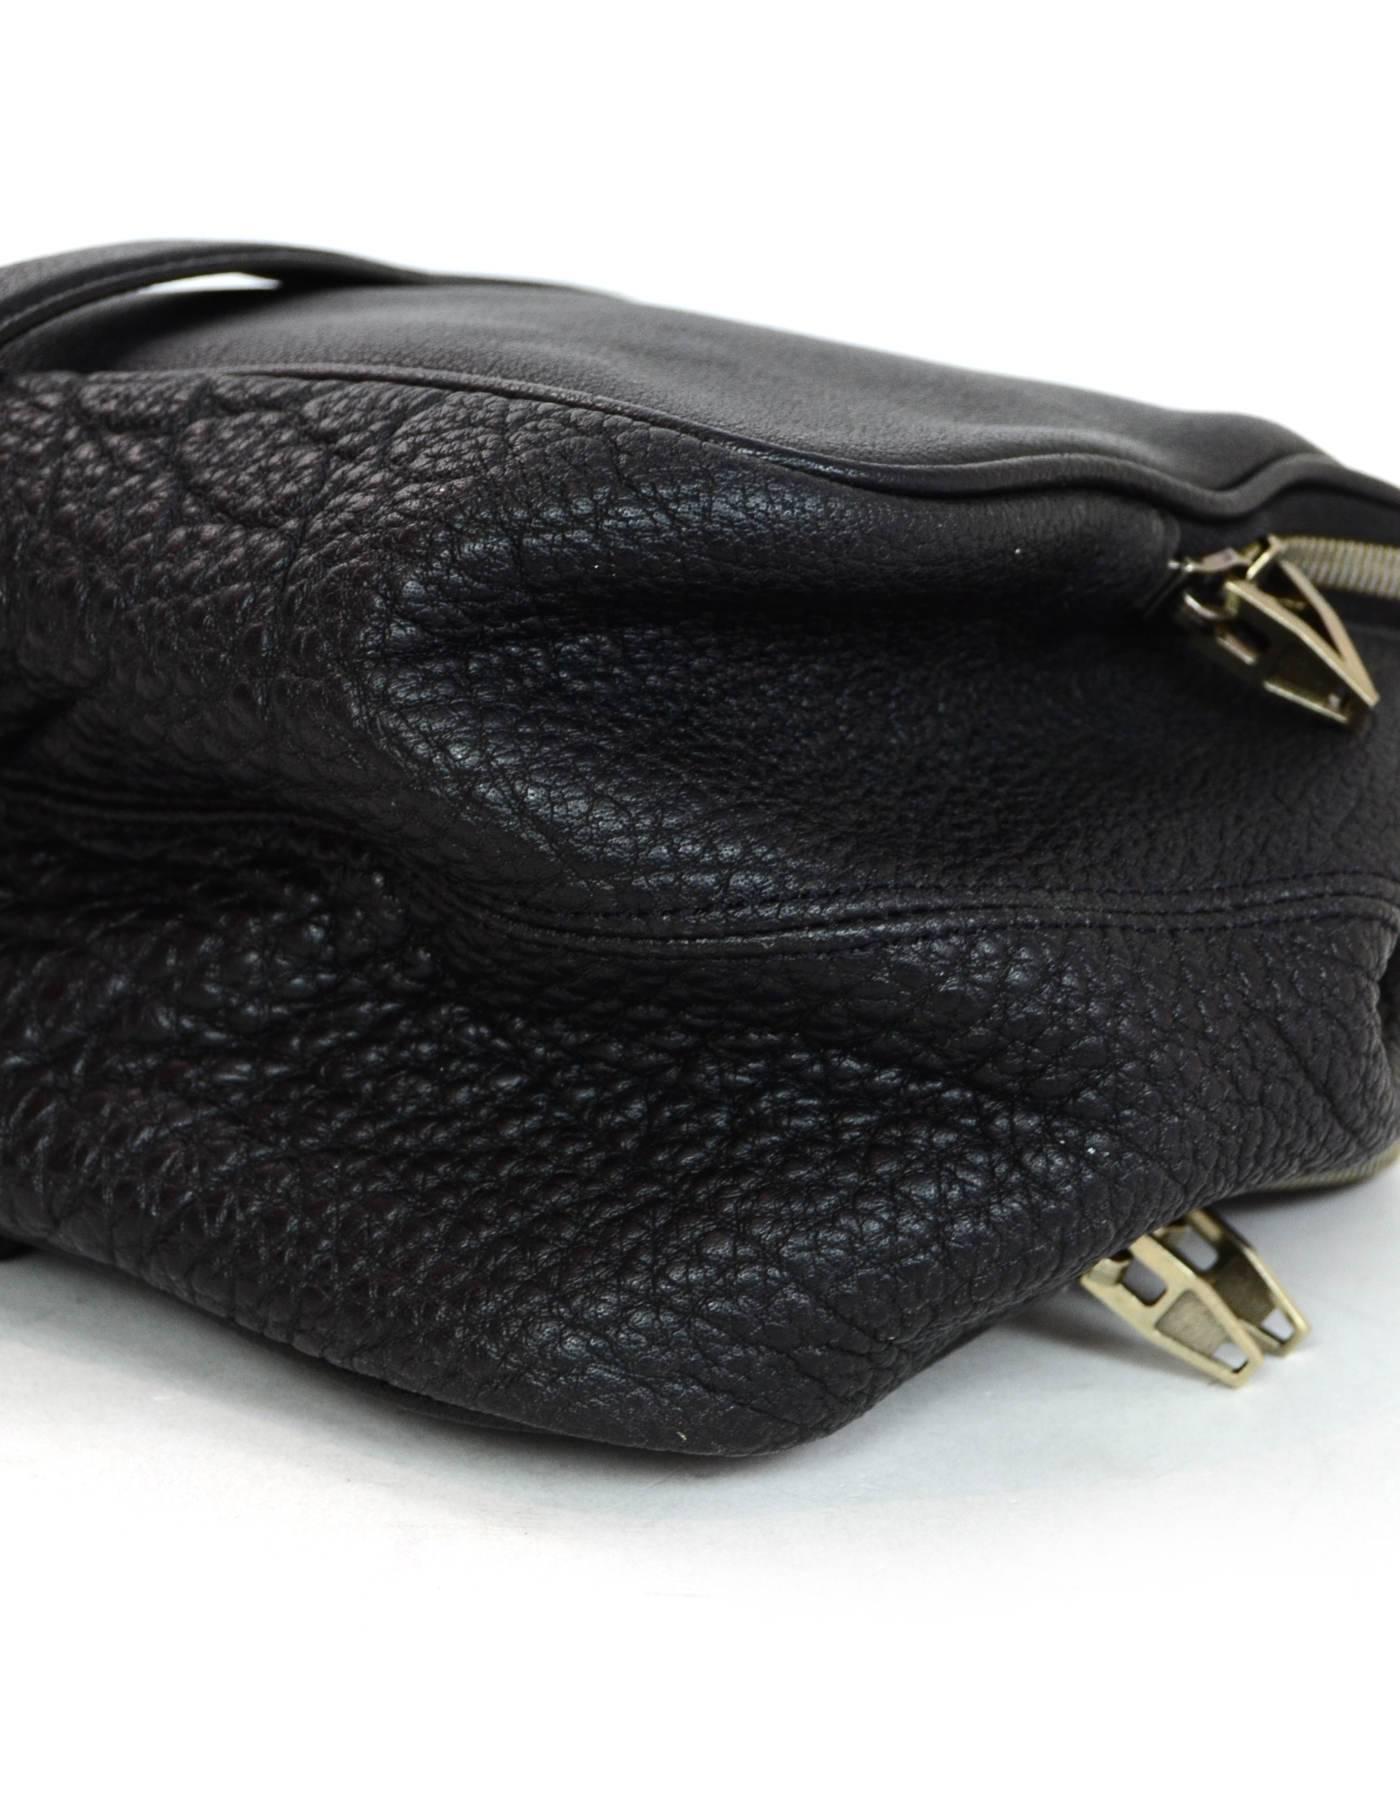 Alexander Wang Black Leather Anita Satchel Bag 1